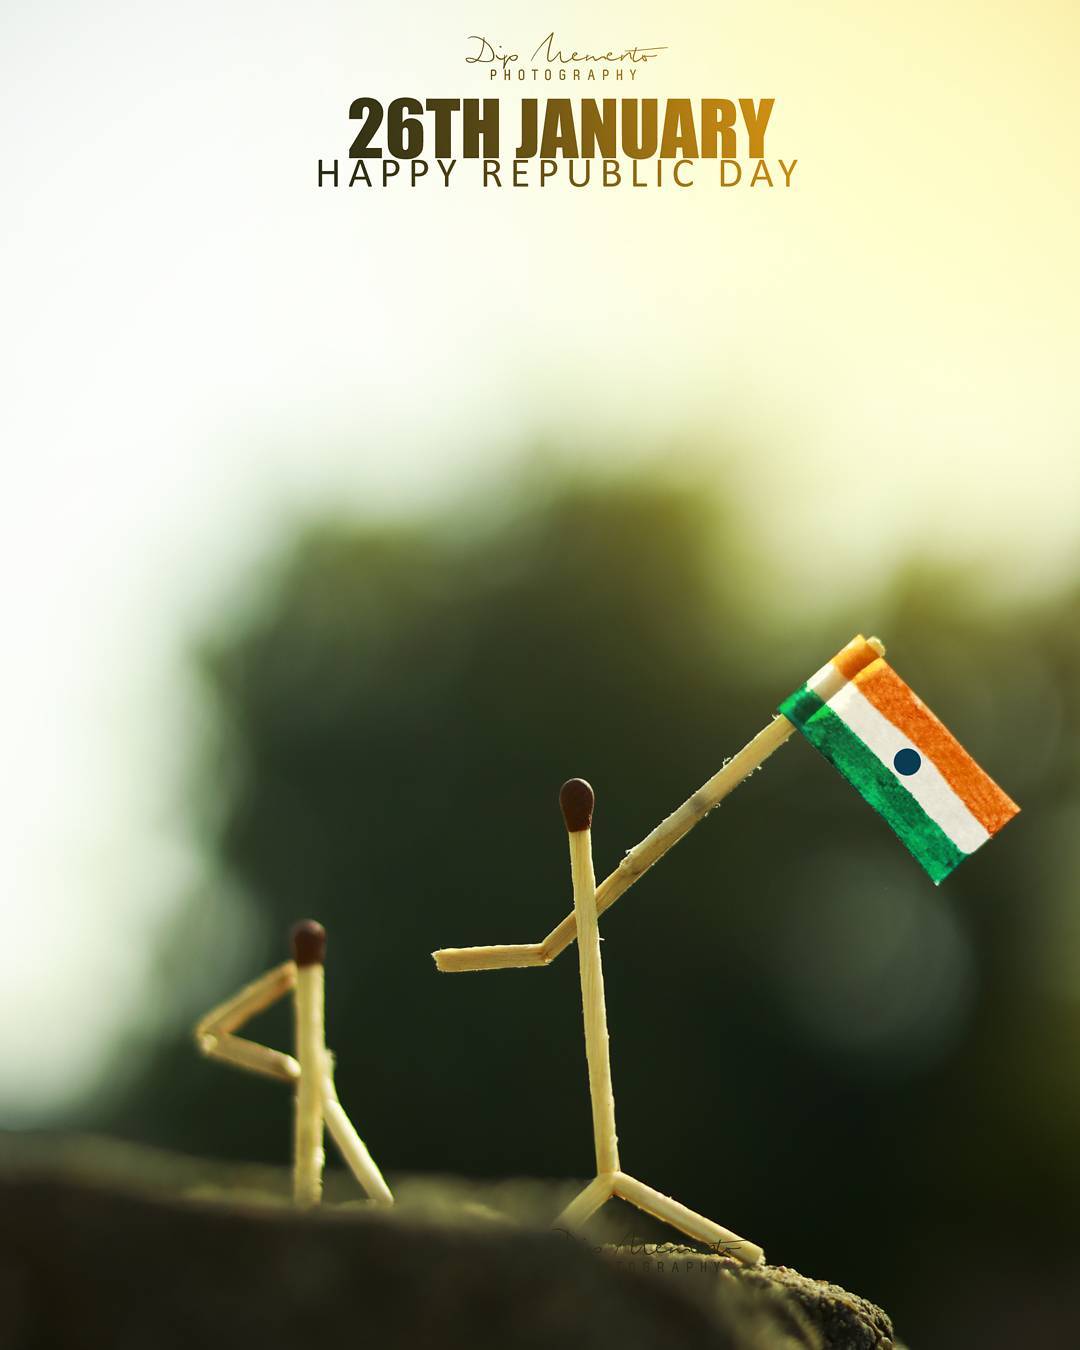 Teach your child to respect Indian flag and india.. Happy #republicday #india .  #dipmementophotography 
#phodus #phodus_competetion #mypixeldiary #i_hobbygraphy #dslrofficial #photographers_of_india #tists #indiaclicks #tales_of_india #ig_colors #desi_diaries #agamesoftones #storiesofindia #streetphotography #creativeimagemagazine #shutterhubindia #indianphotographyclub #trellingdelhi #photo_pond #monochromeindia #india_ig #_instaindia_ #igindiaview #iop #streetphotographydelhi
.
@photographers.of.india @colours.of.india @dslrofficial @india_undiscovered @__indian_photography__ @photographers_of_india @hindustan.pictures @the.anonymous.photographers @india_everyday @canon_photos @indian.hobbygraphy @india_gram @adobe @streetphotofactory @phodus_competition @dpeginsta @igindiaview @igvisualcaptures @indian_clickers_ @indianshutterbugs @indiashutterbugs @galiphotography_ @photofieteam @delhiwale @travel.real.india @monochromeindia @naturephotography.india @photofieteam @cloud_ig @indiaview @delhihai @india.clicks @official_photography_hub @trellingdelhi @agameoftones @photographers__of__india @lonelyplanetindia @imperial.india @click.ig @dslr_photographers @talent_wall @jmu_talent_destination @natgeocreative @creativeimagemagazineo @iop_delhi @photo_pond @talent_of_india @talent_wall #doicontest17 #9924227745 #dipmementophotography #dip_memento_photography